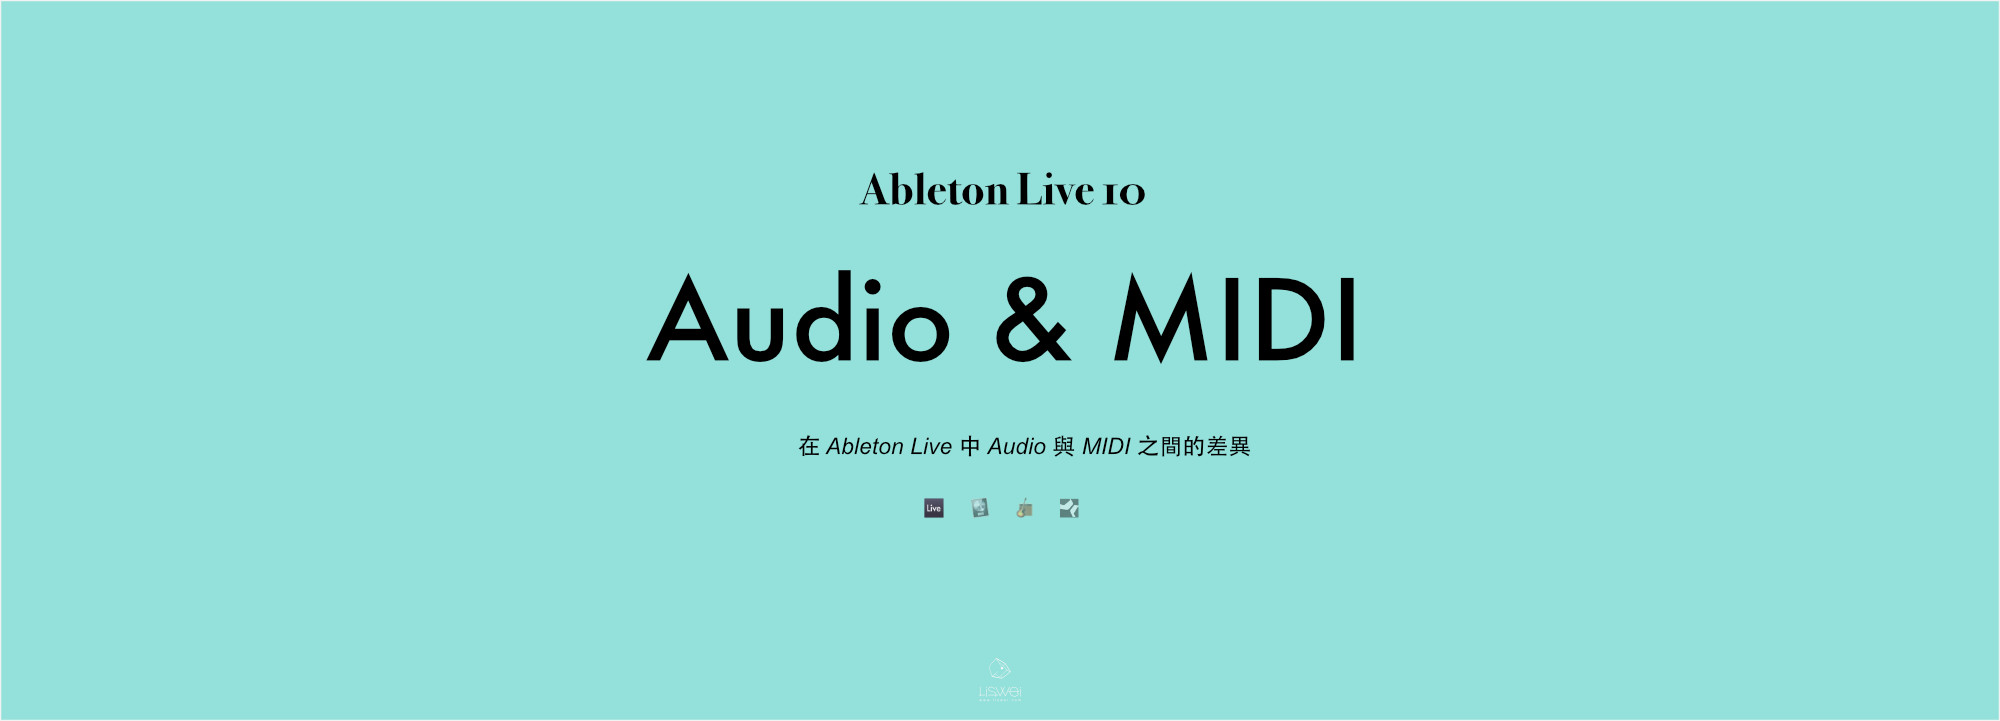 Ableton Live Audio MIDI